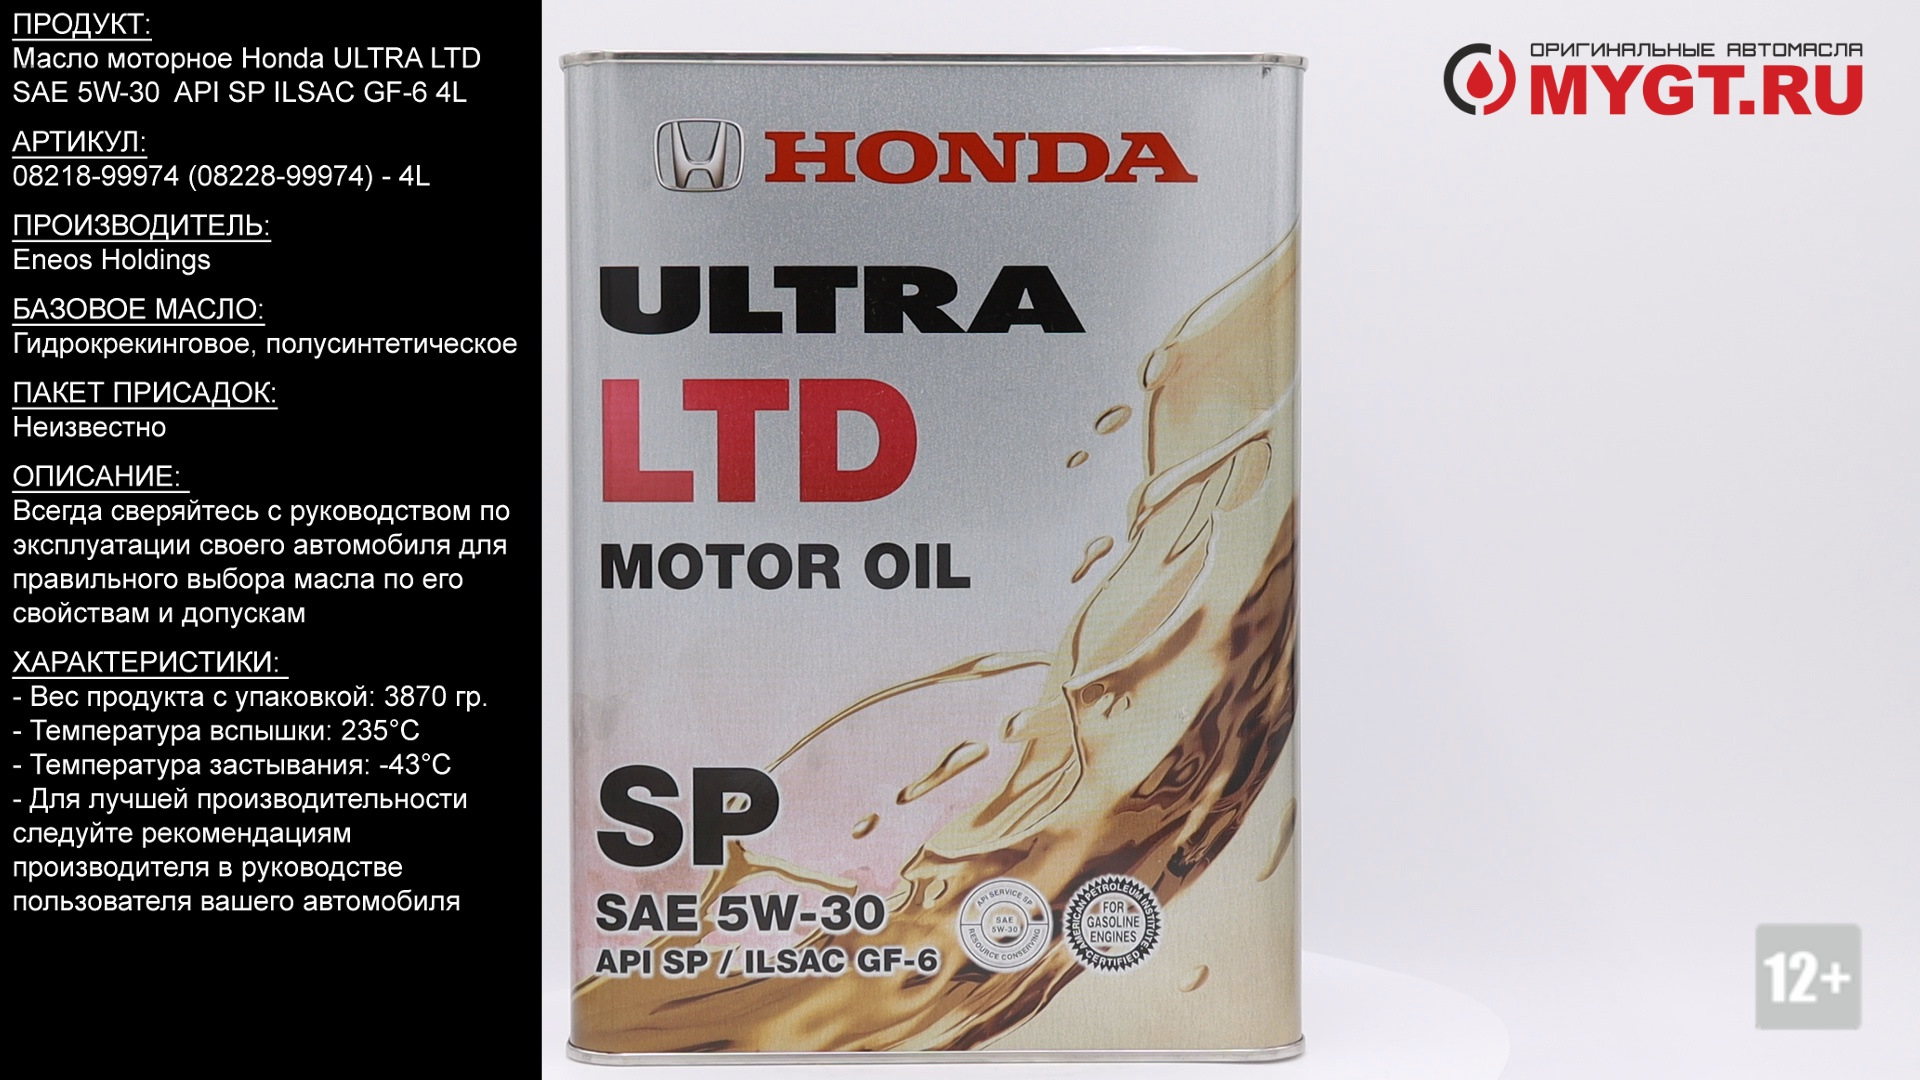 Масло honda 5. Honda Ultra Ltd 5w30. Honda Ultra Ltd 5w30 SN. Масло Honda 5w30 SP. Honda Ultra Ltd 5w-30 SP 4л.